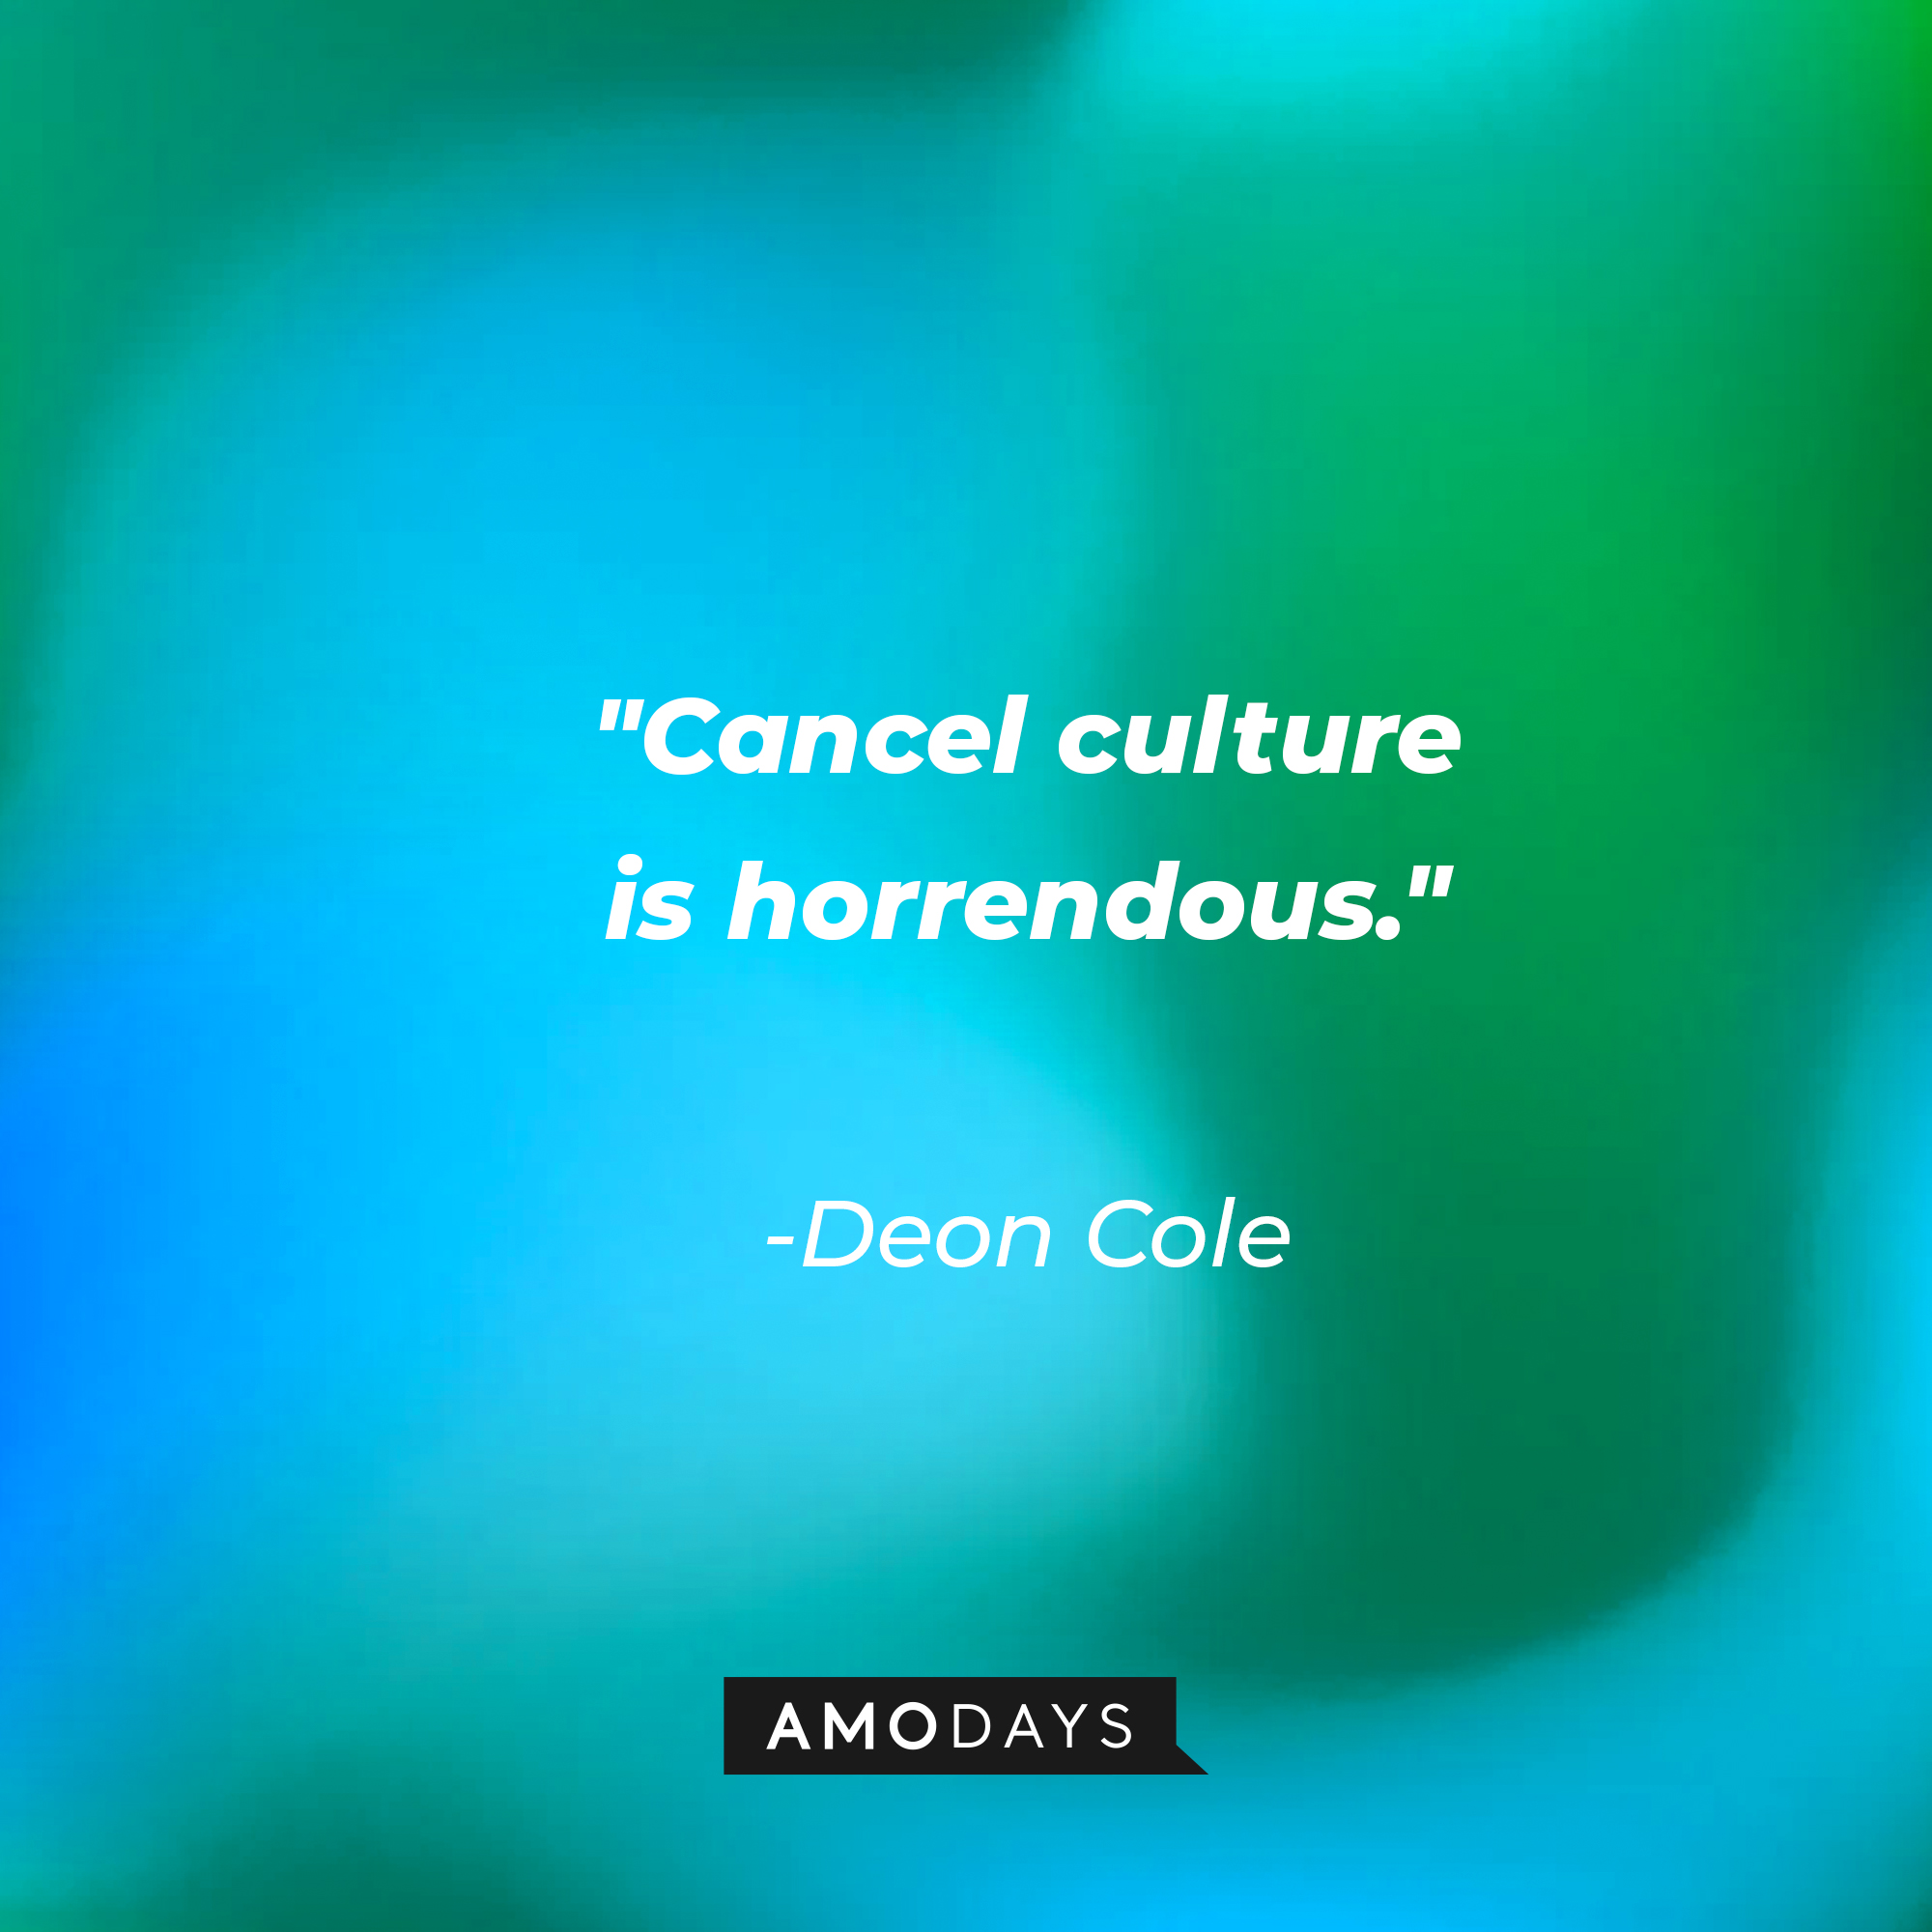 Deon Cole's quote: "Cancel culture is horrendous." | Source: AmoDays